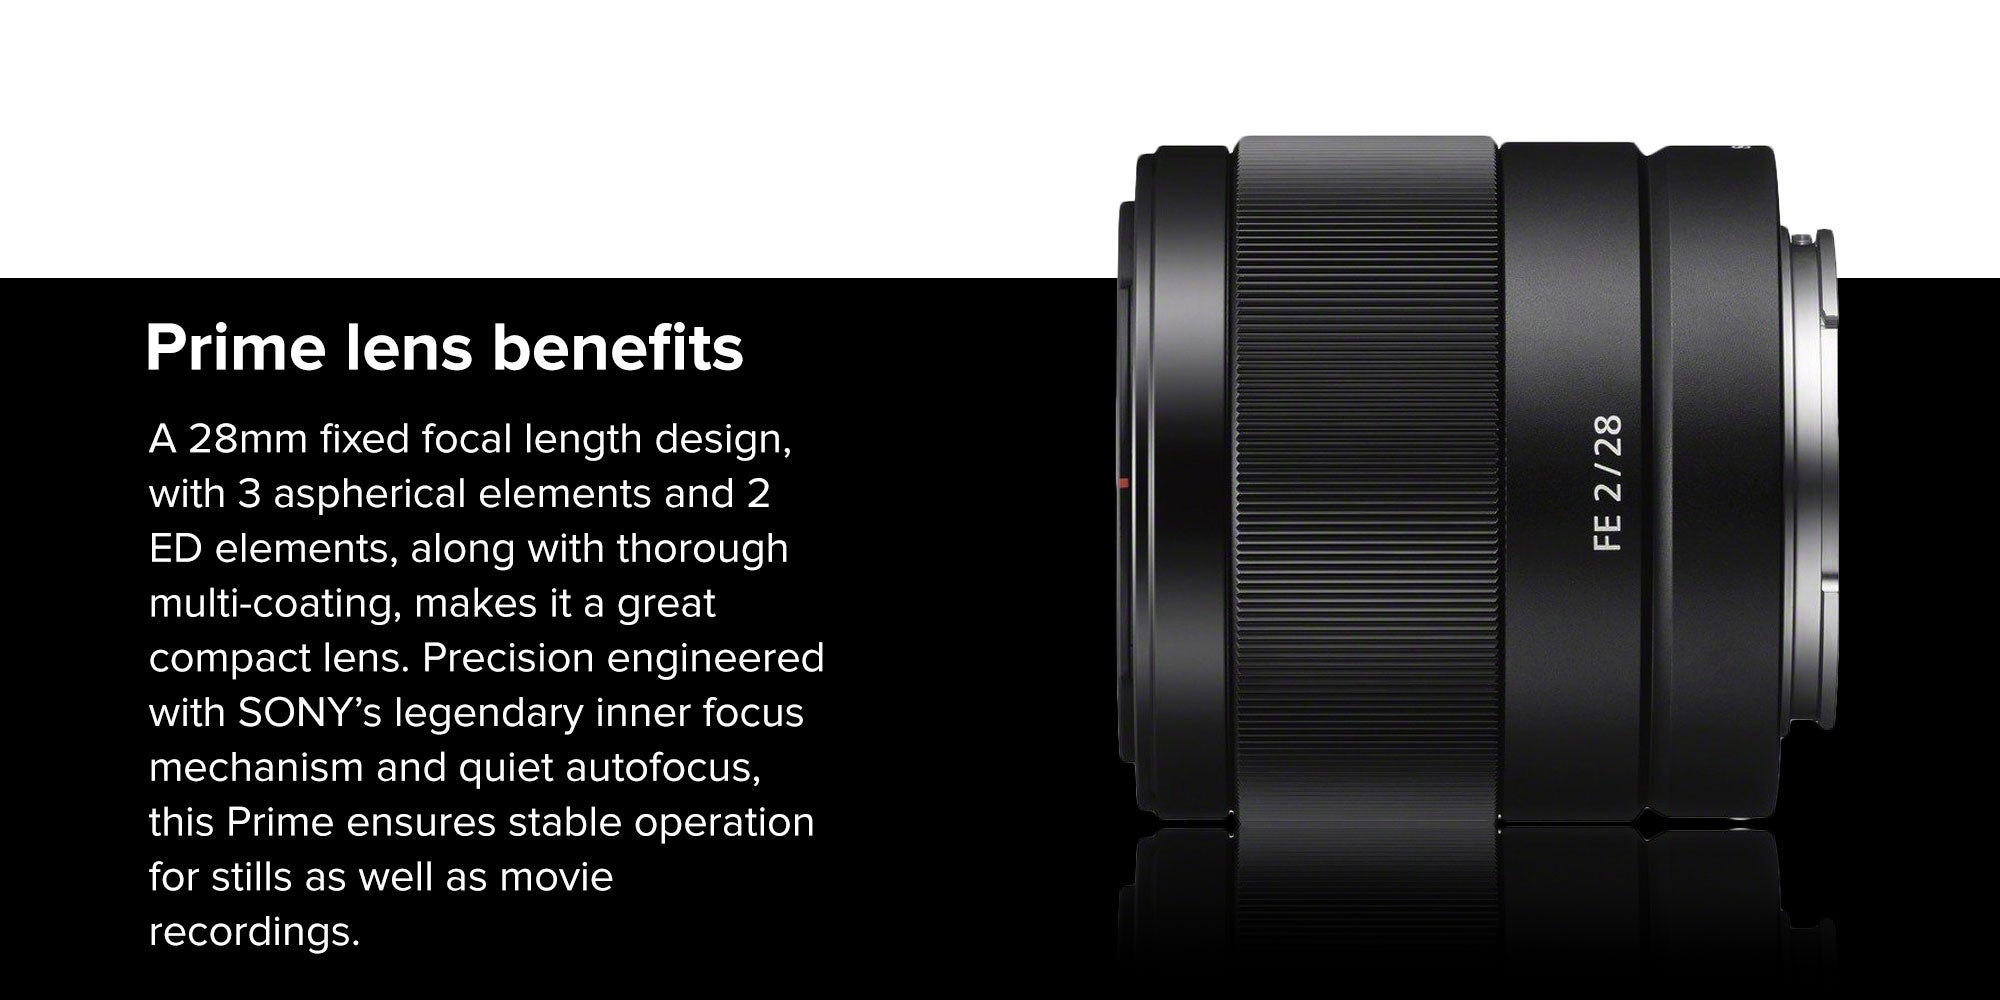 28mm f/2-22 Standard-Prime Lens For Sony Mirrorless Cameras Black